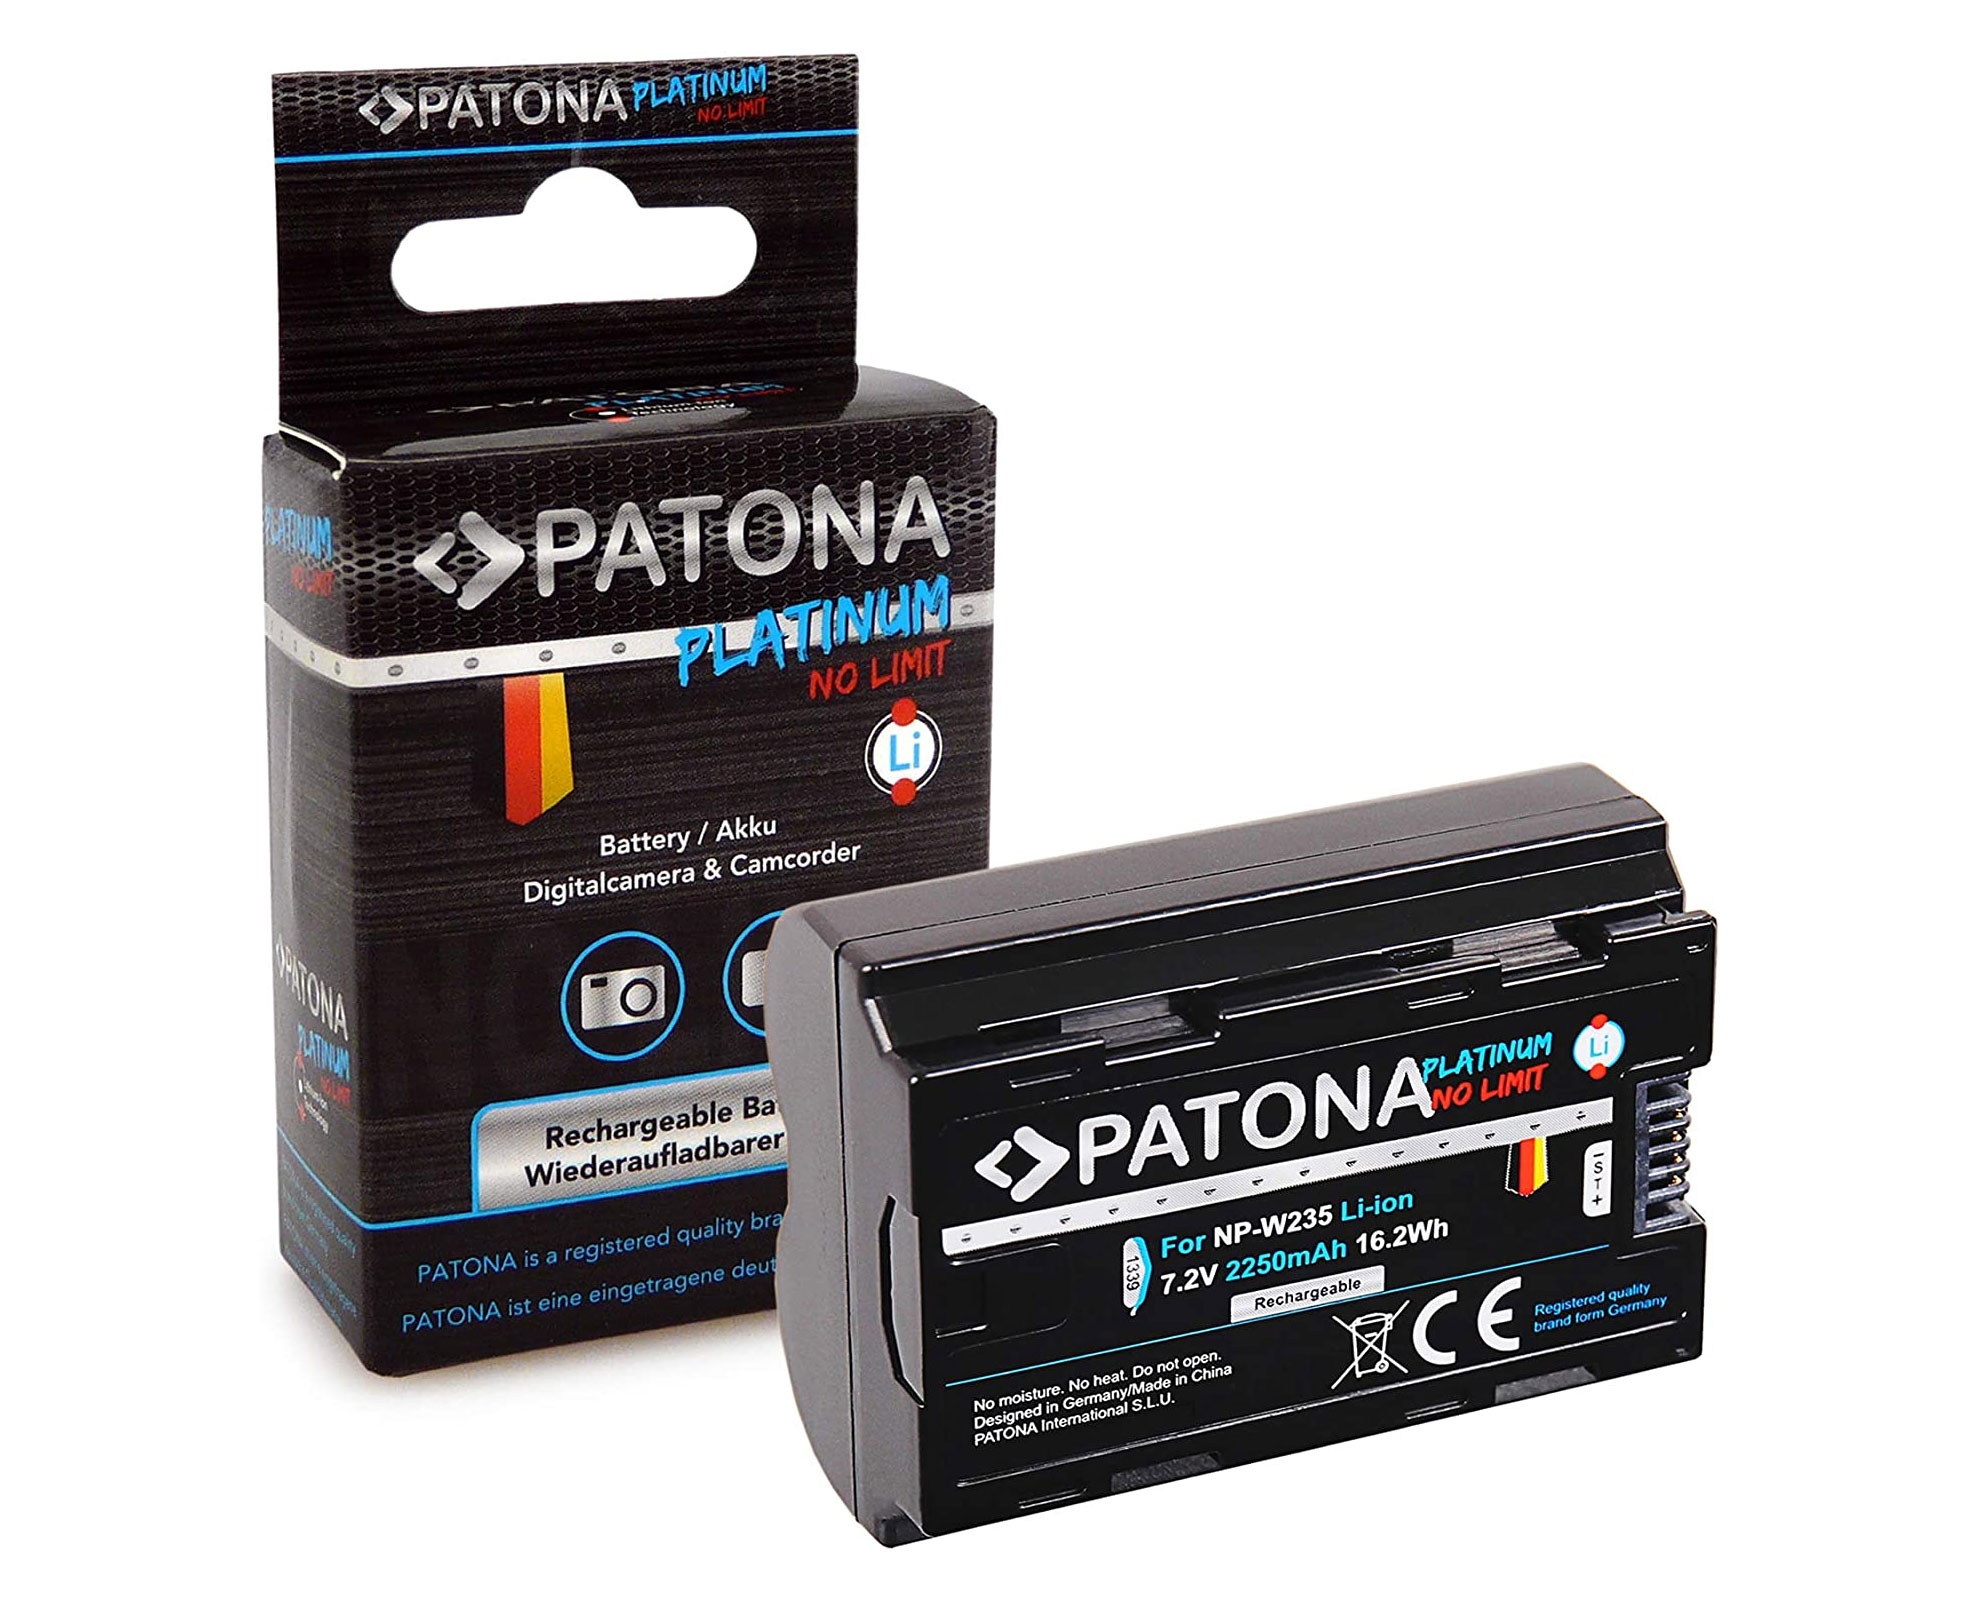 Patona Platinum NP-W235